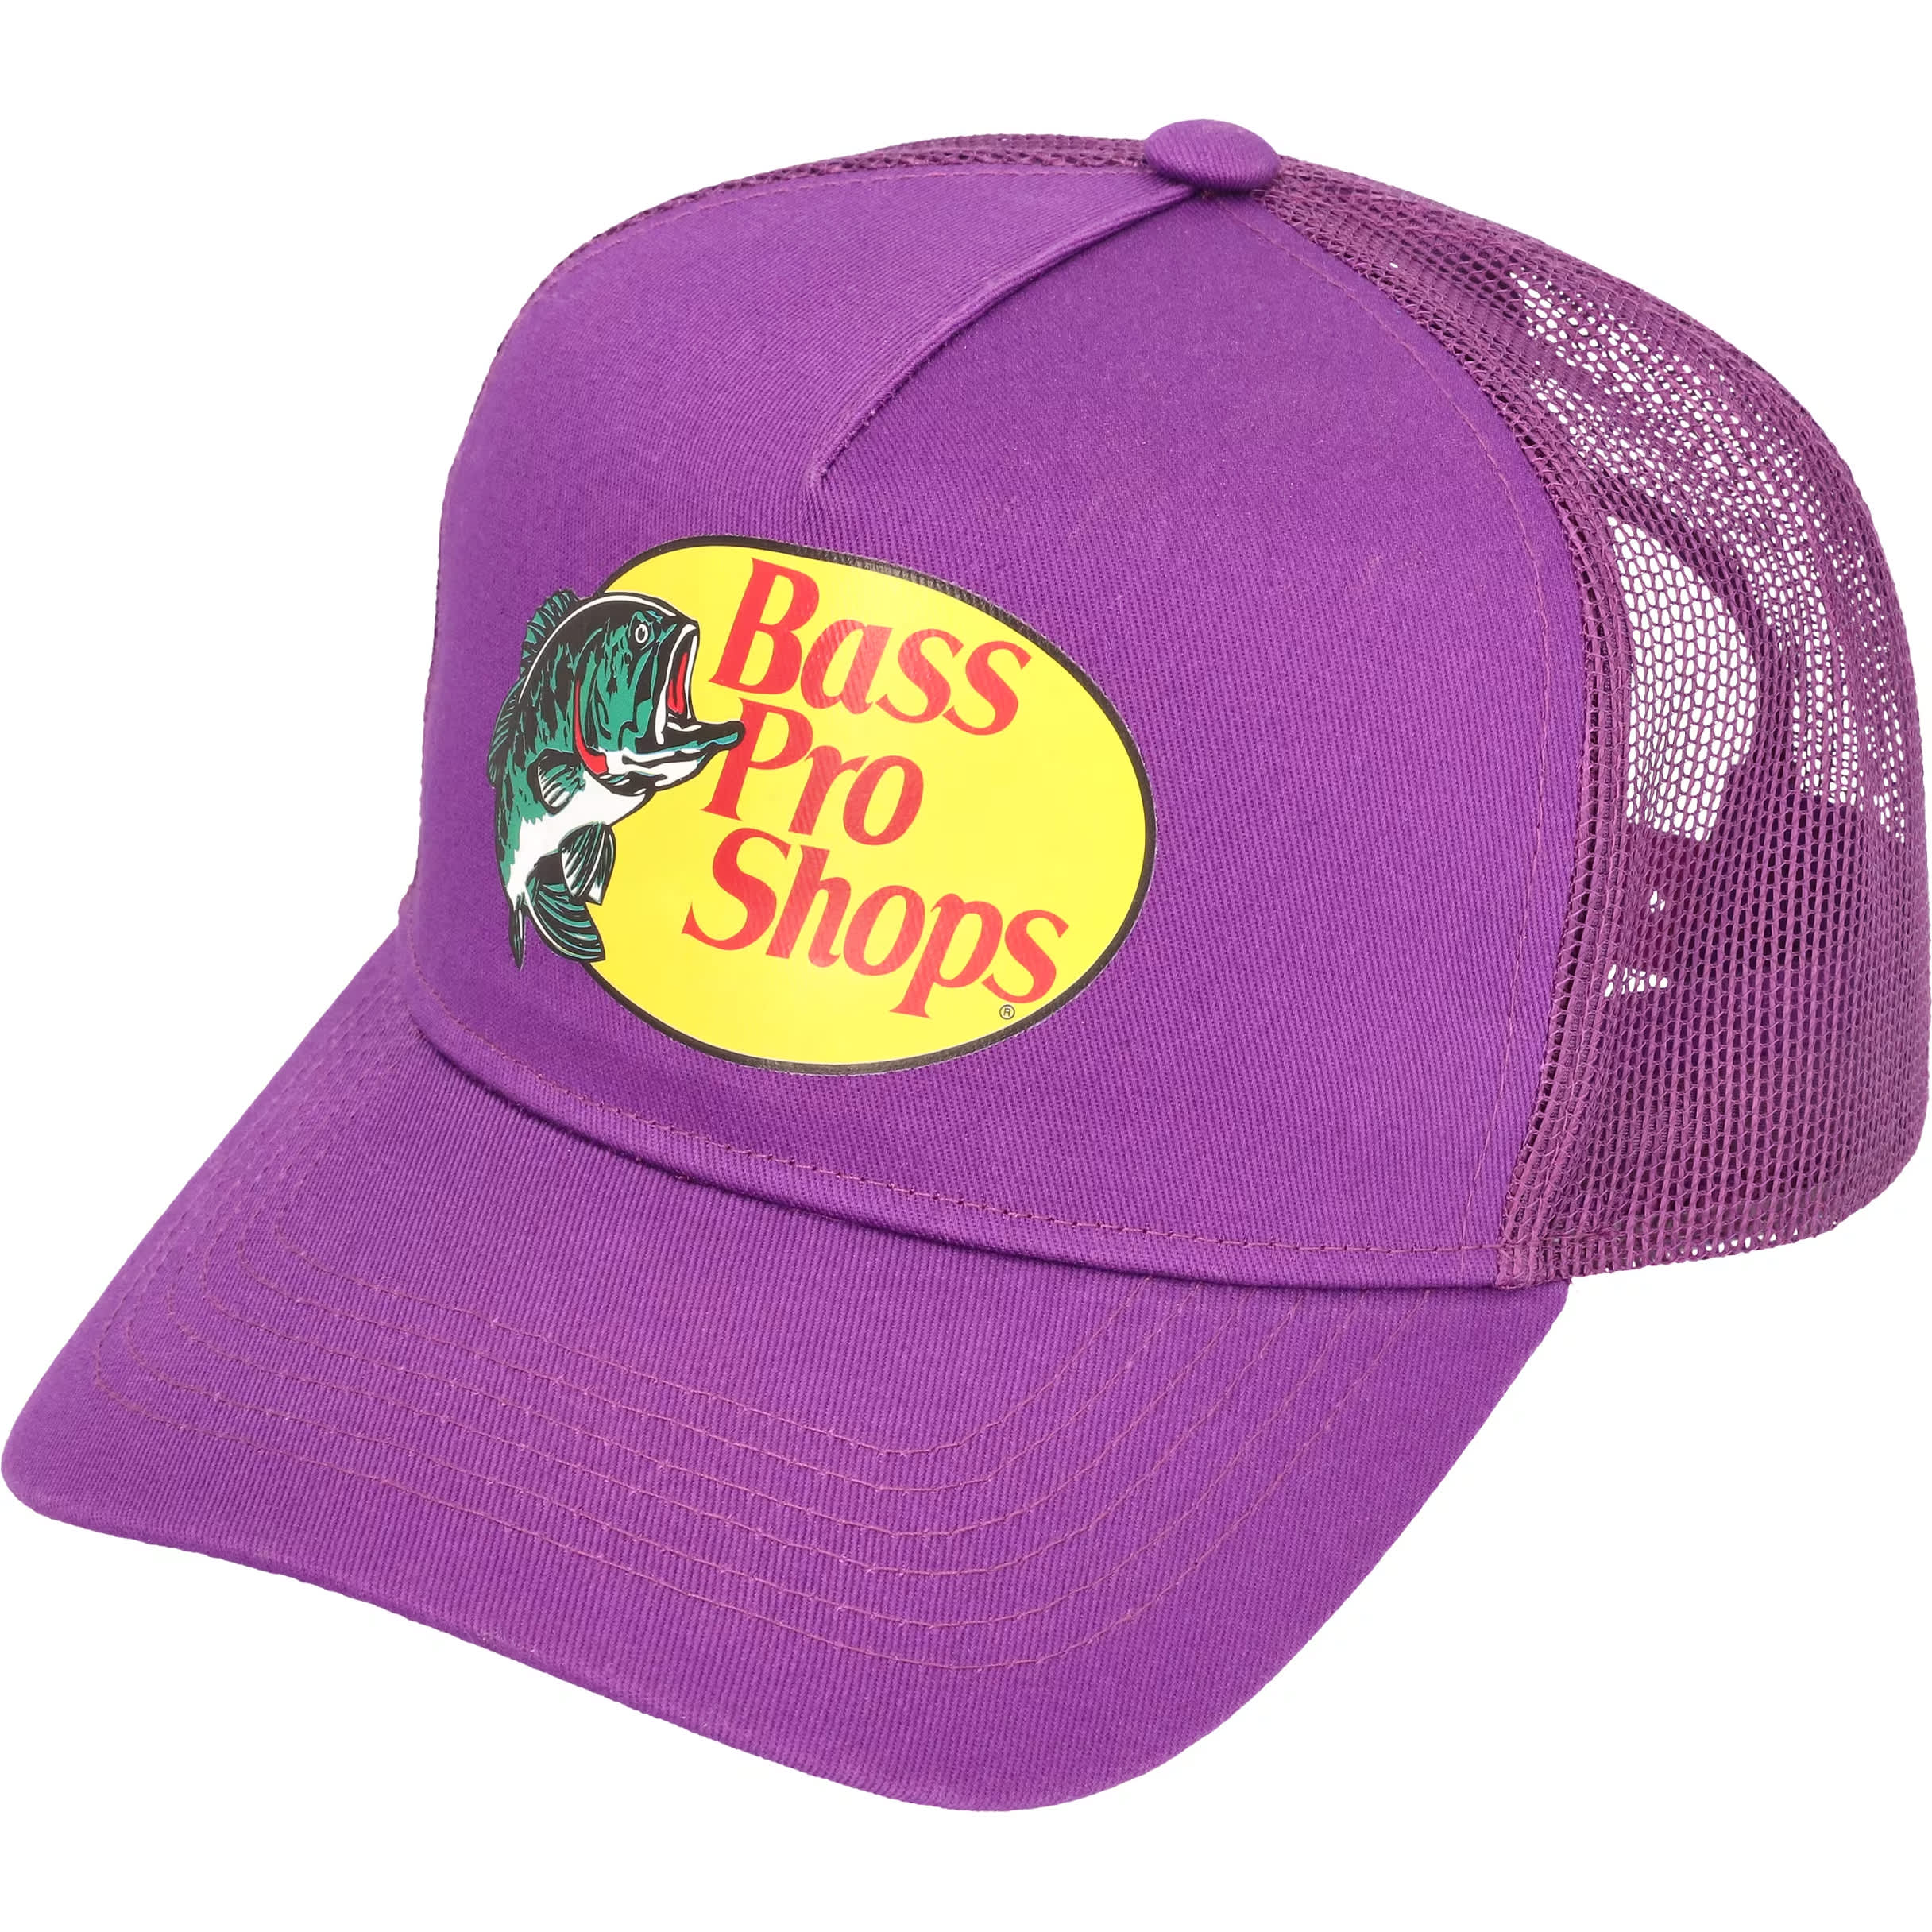 Bass Pro Shops Outdoor Fishing Army Green Snapback Trucker Mesh Hat Cap